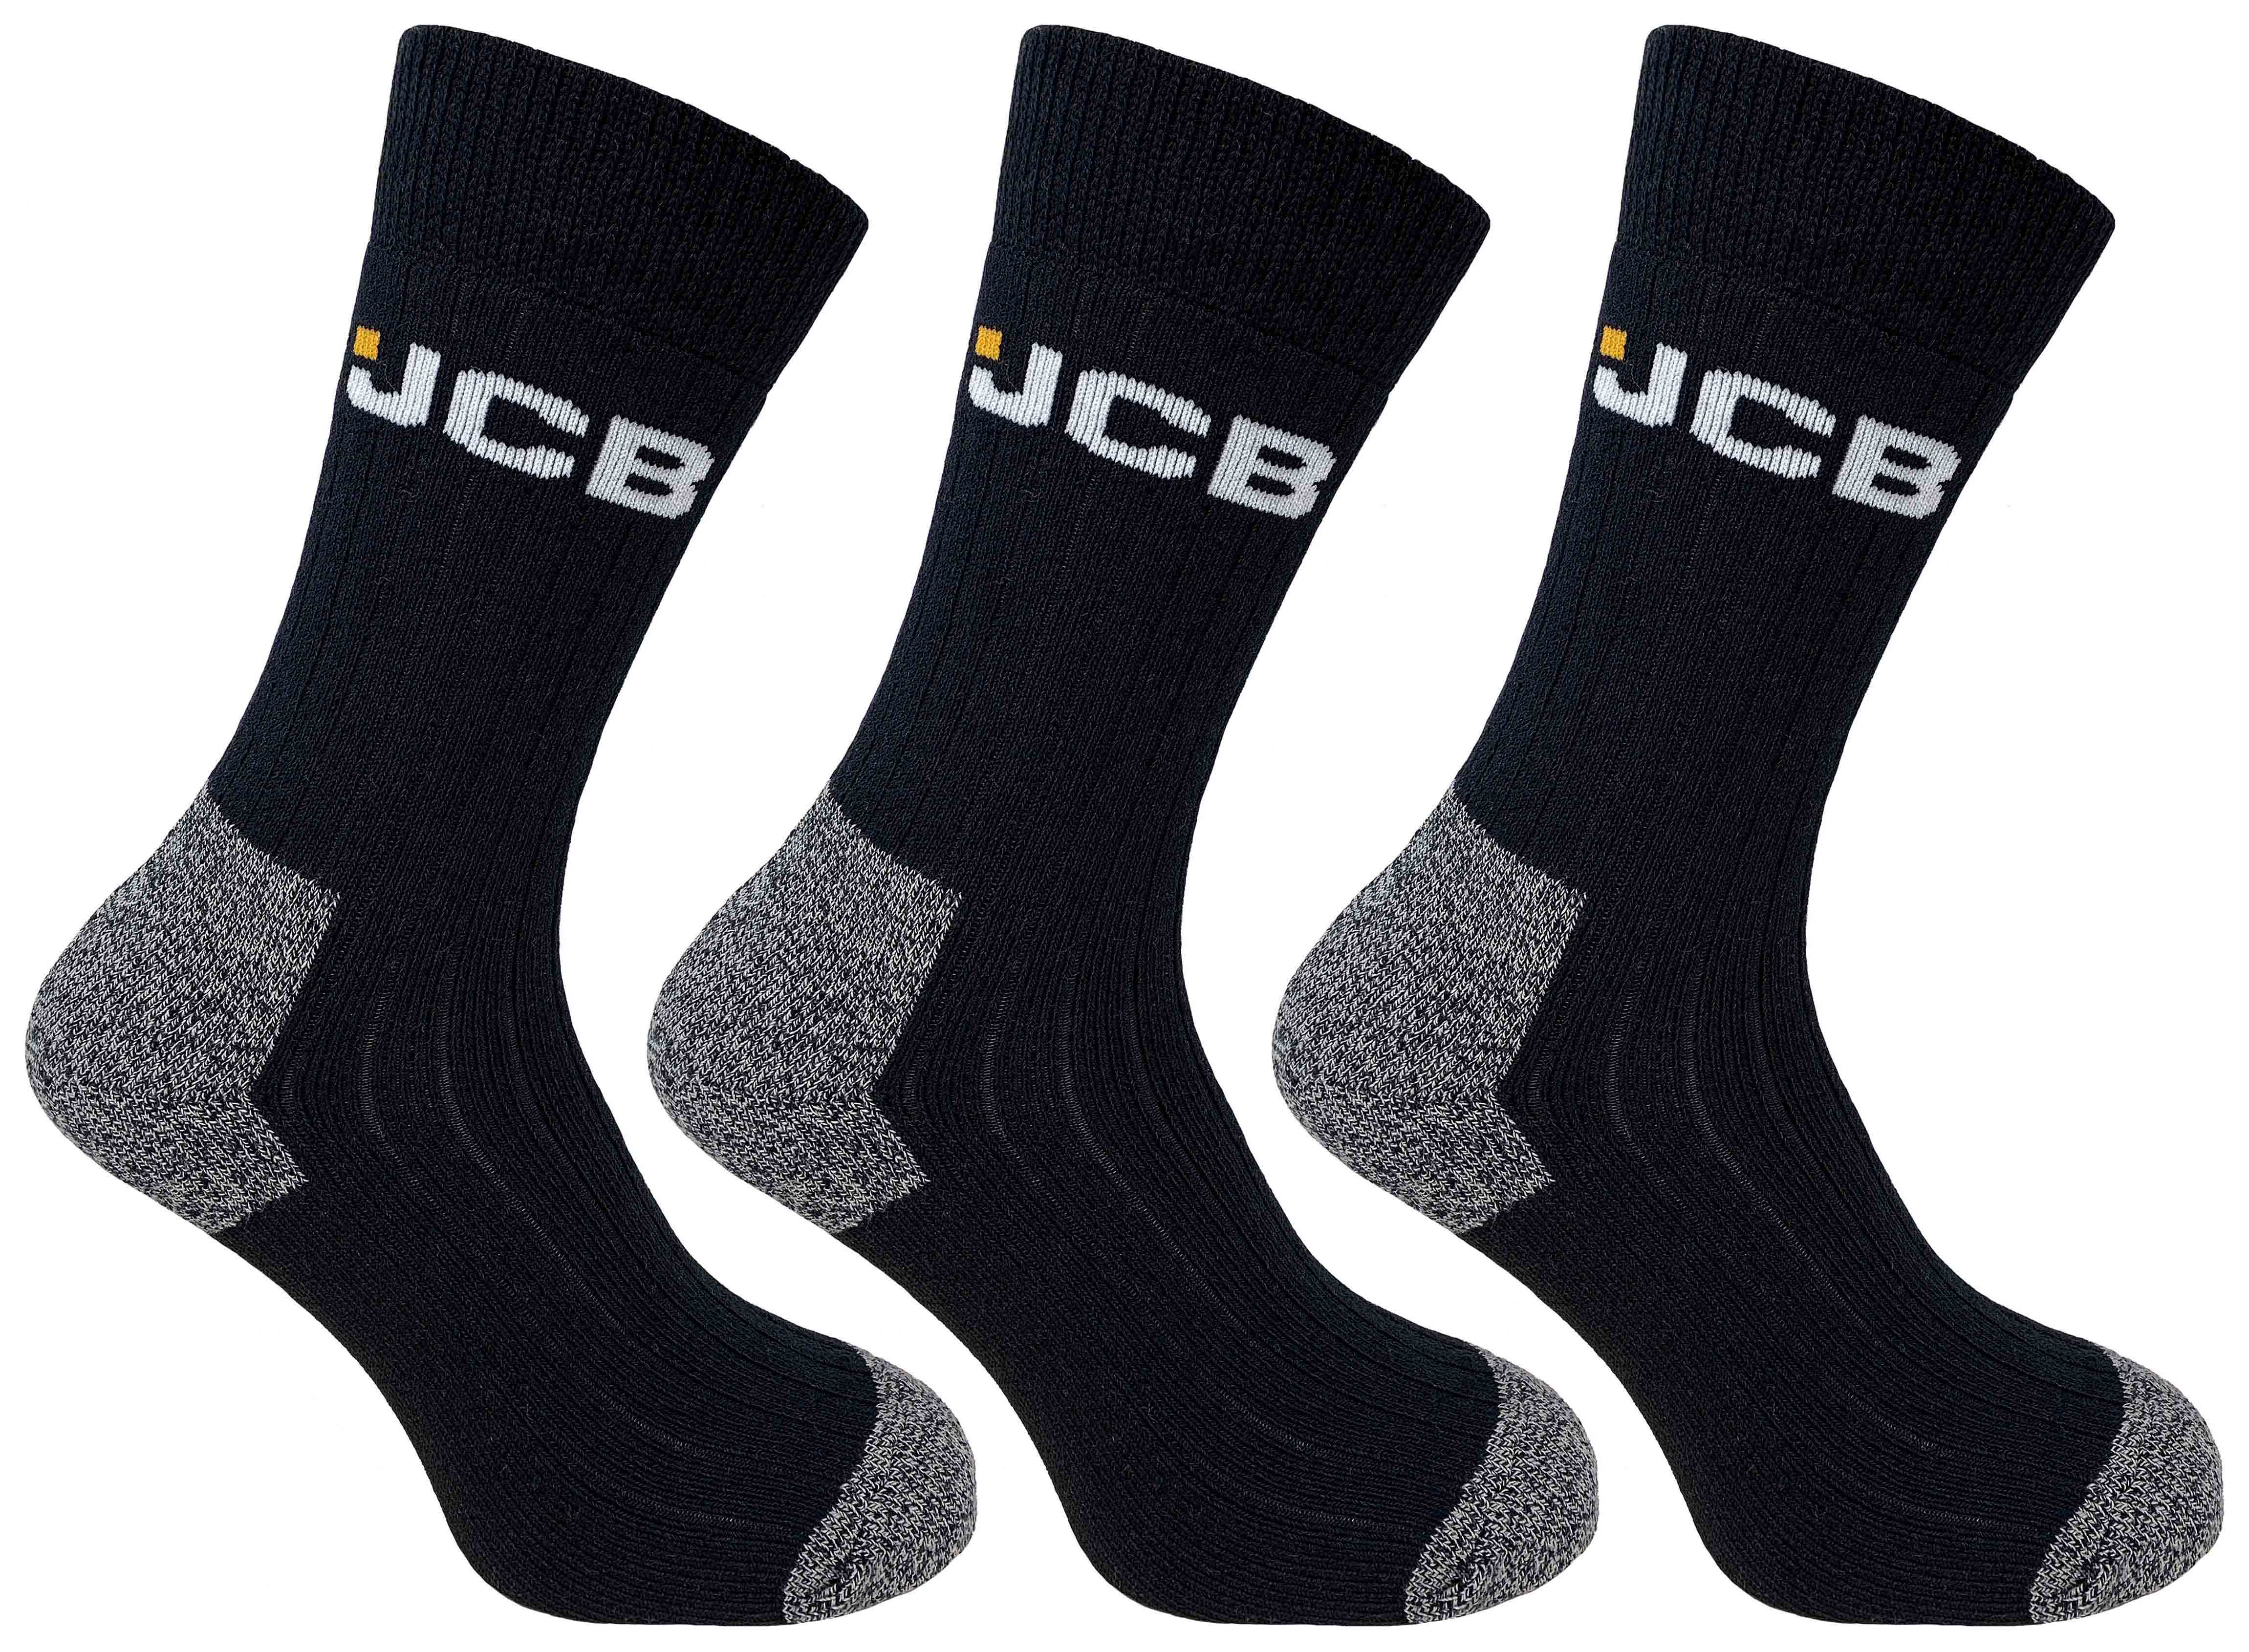 JCB JCBX000025 Workwear Apparel Socks Pack of 3